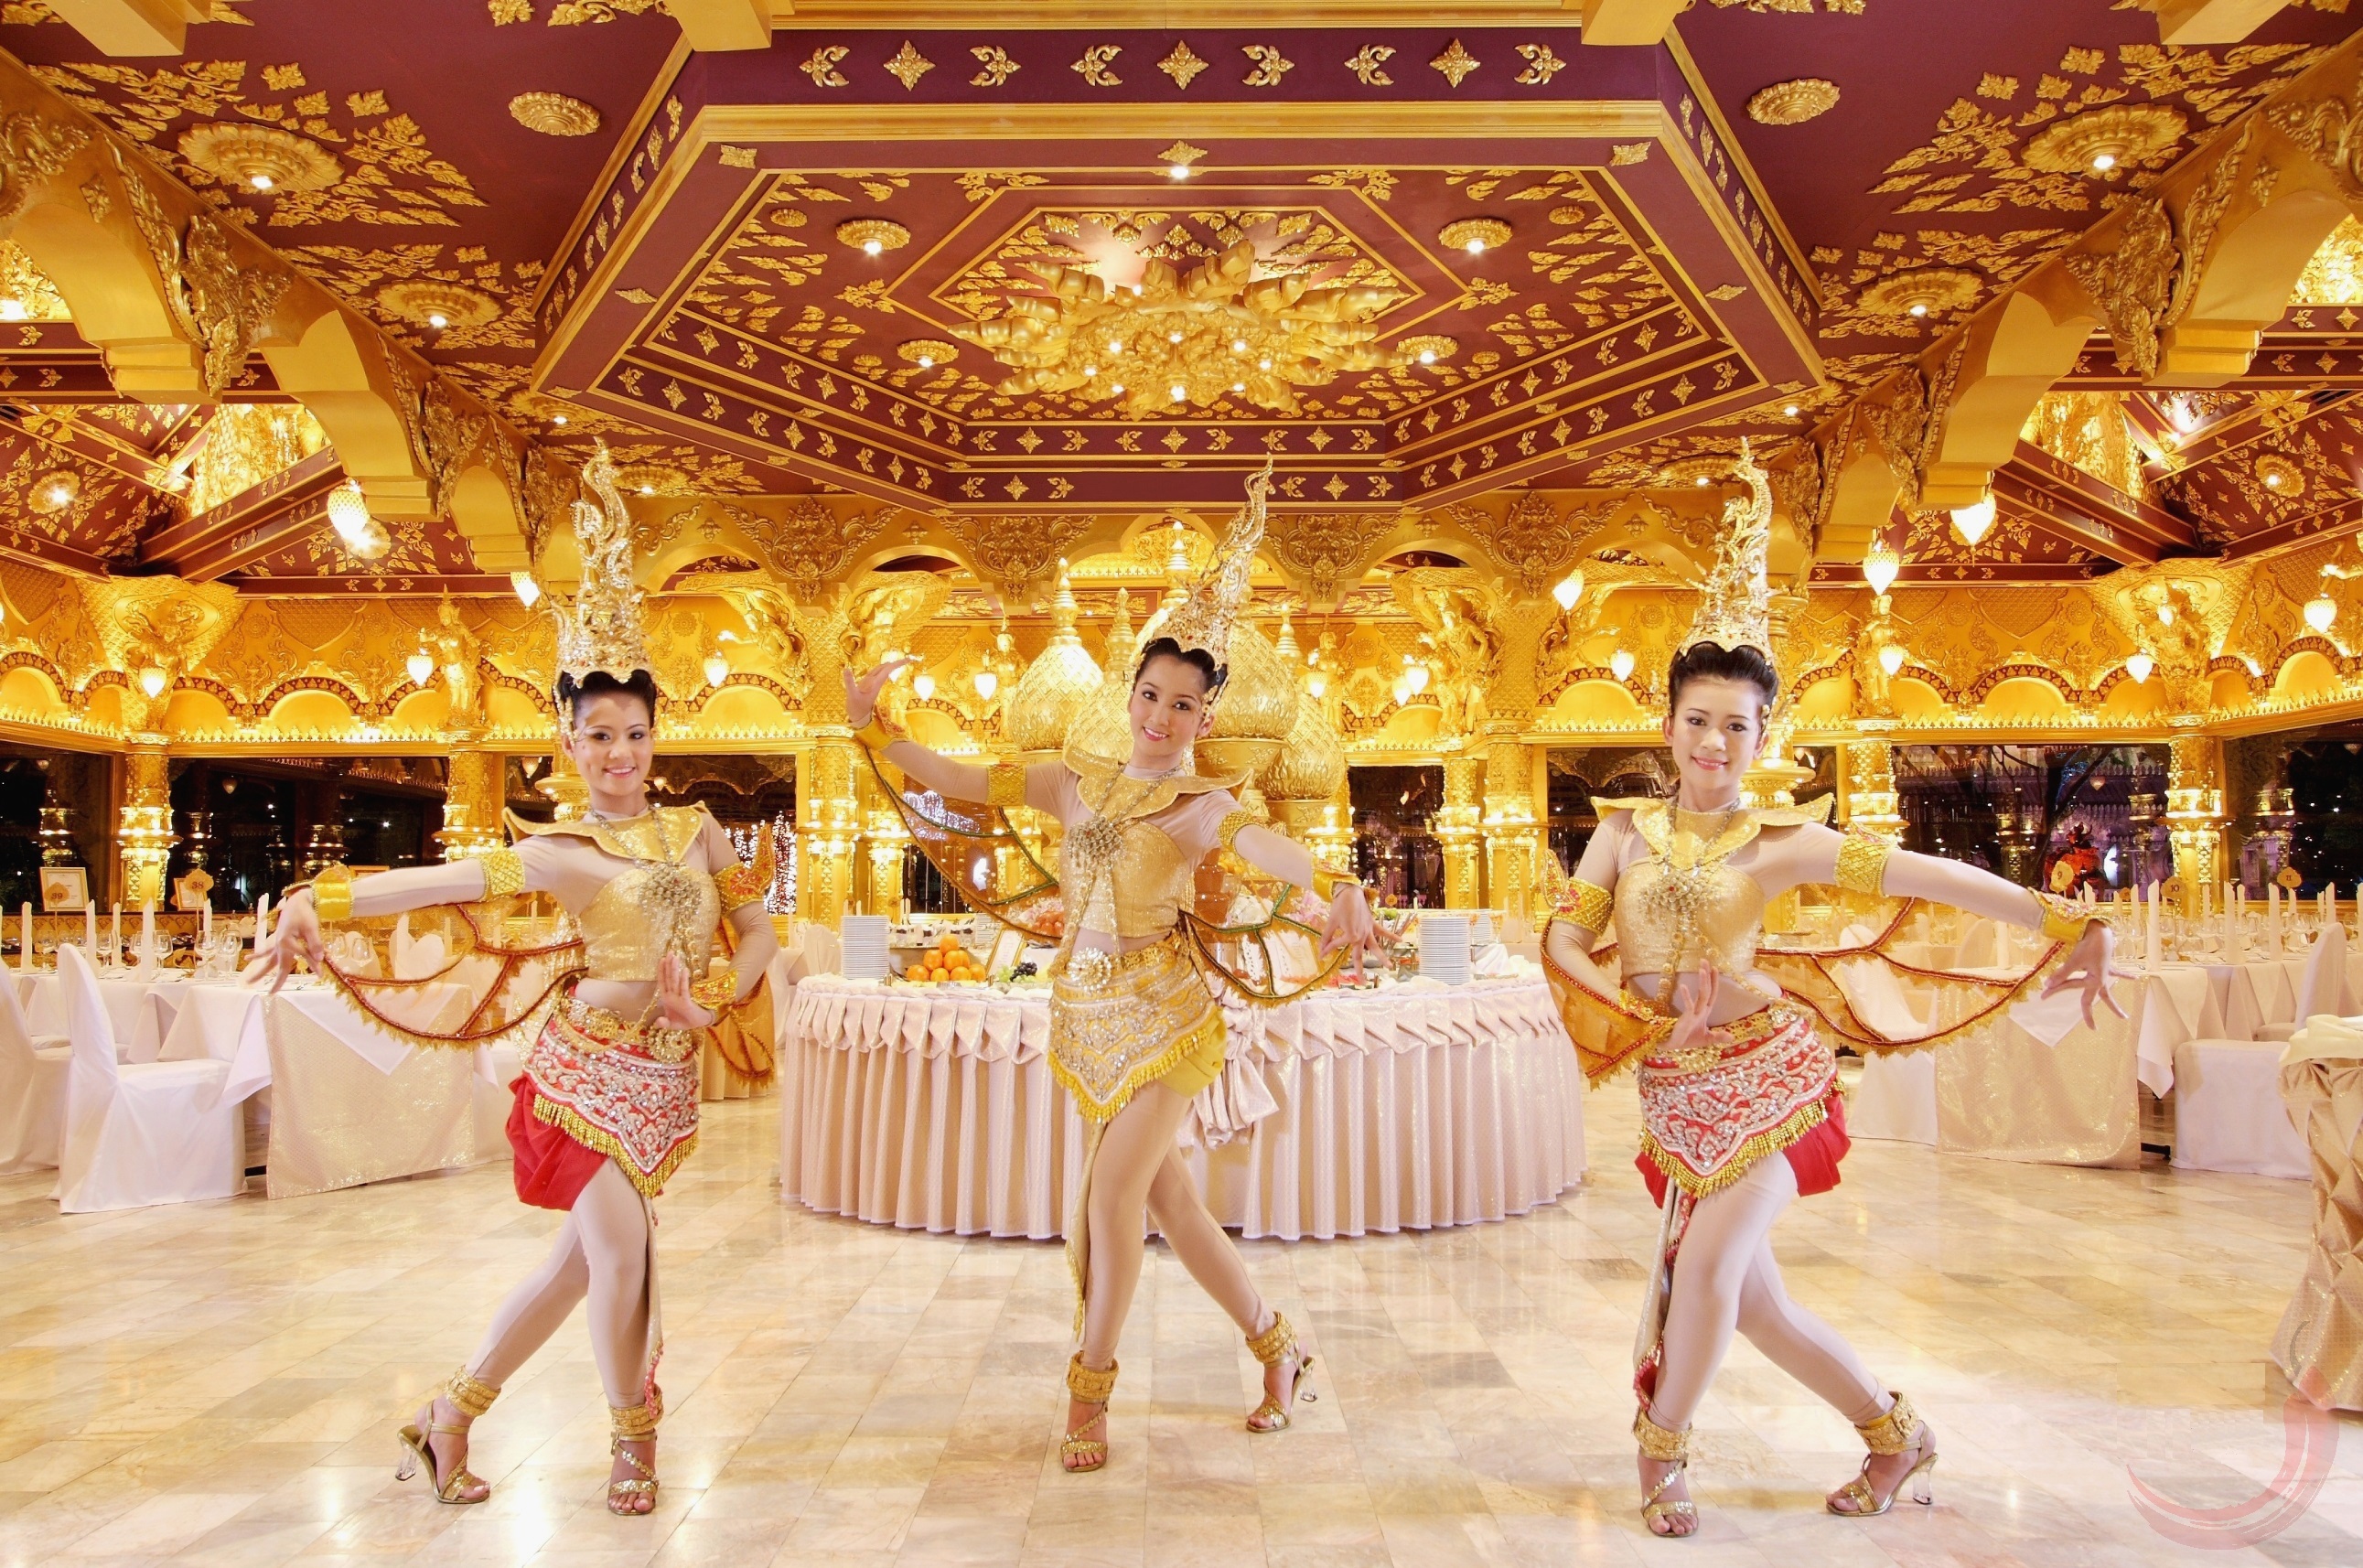 Phuket FantaSea – The Ultimate Thai Cultural Theme Show